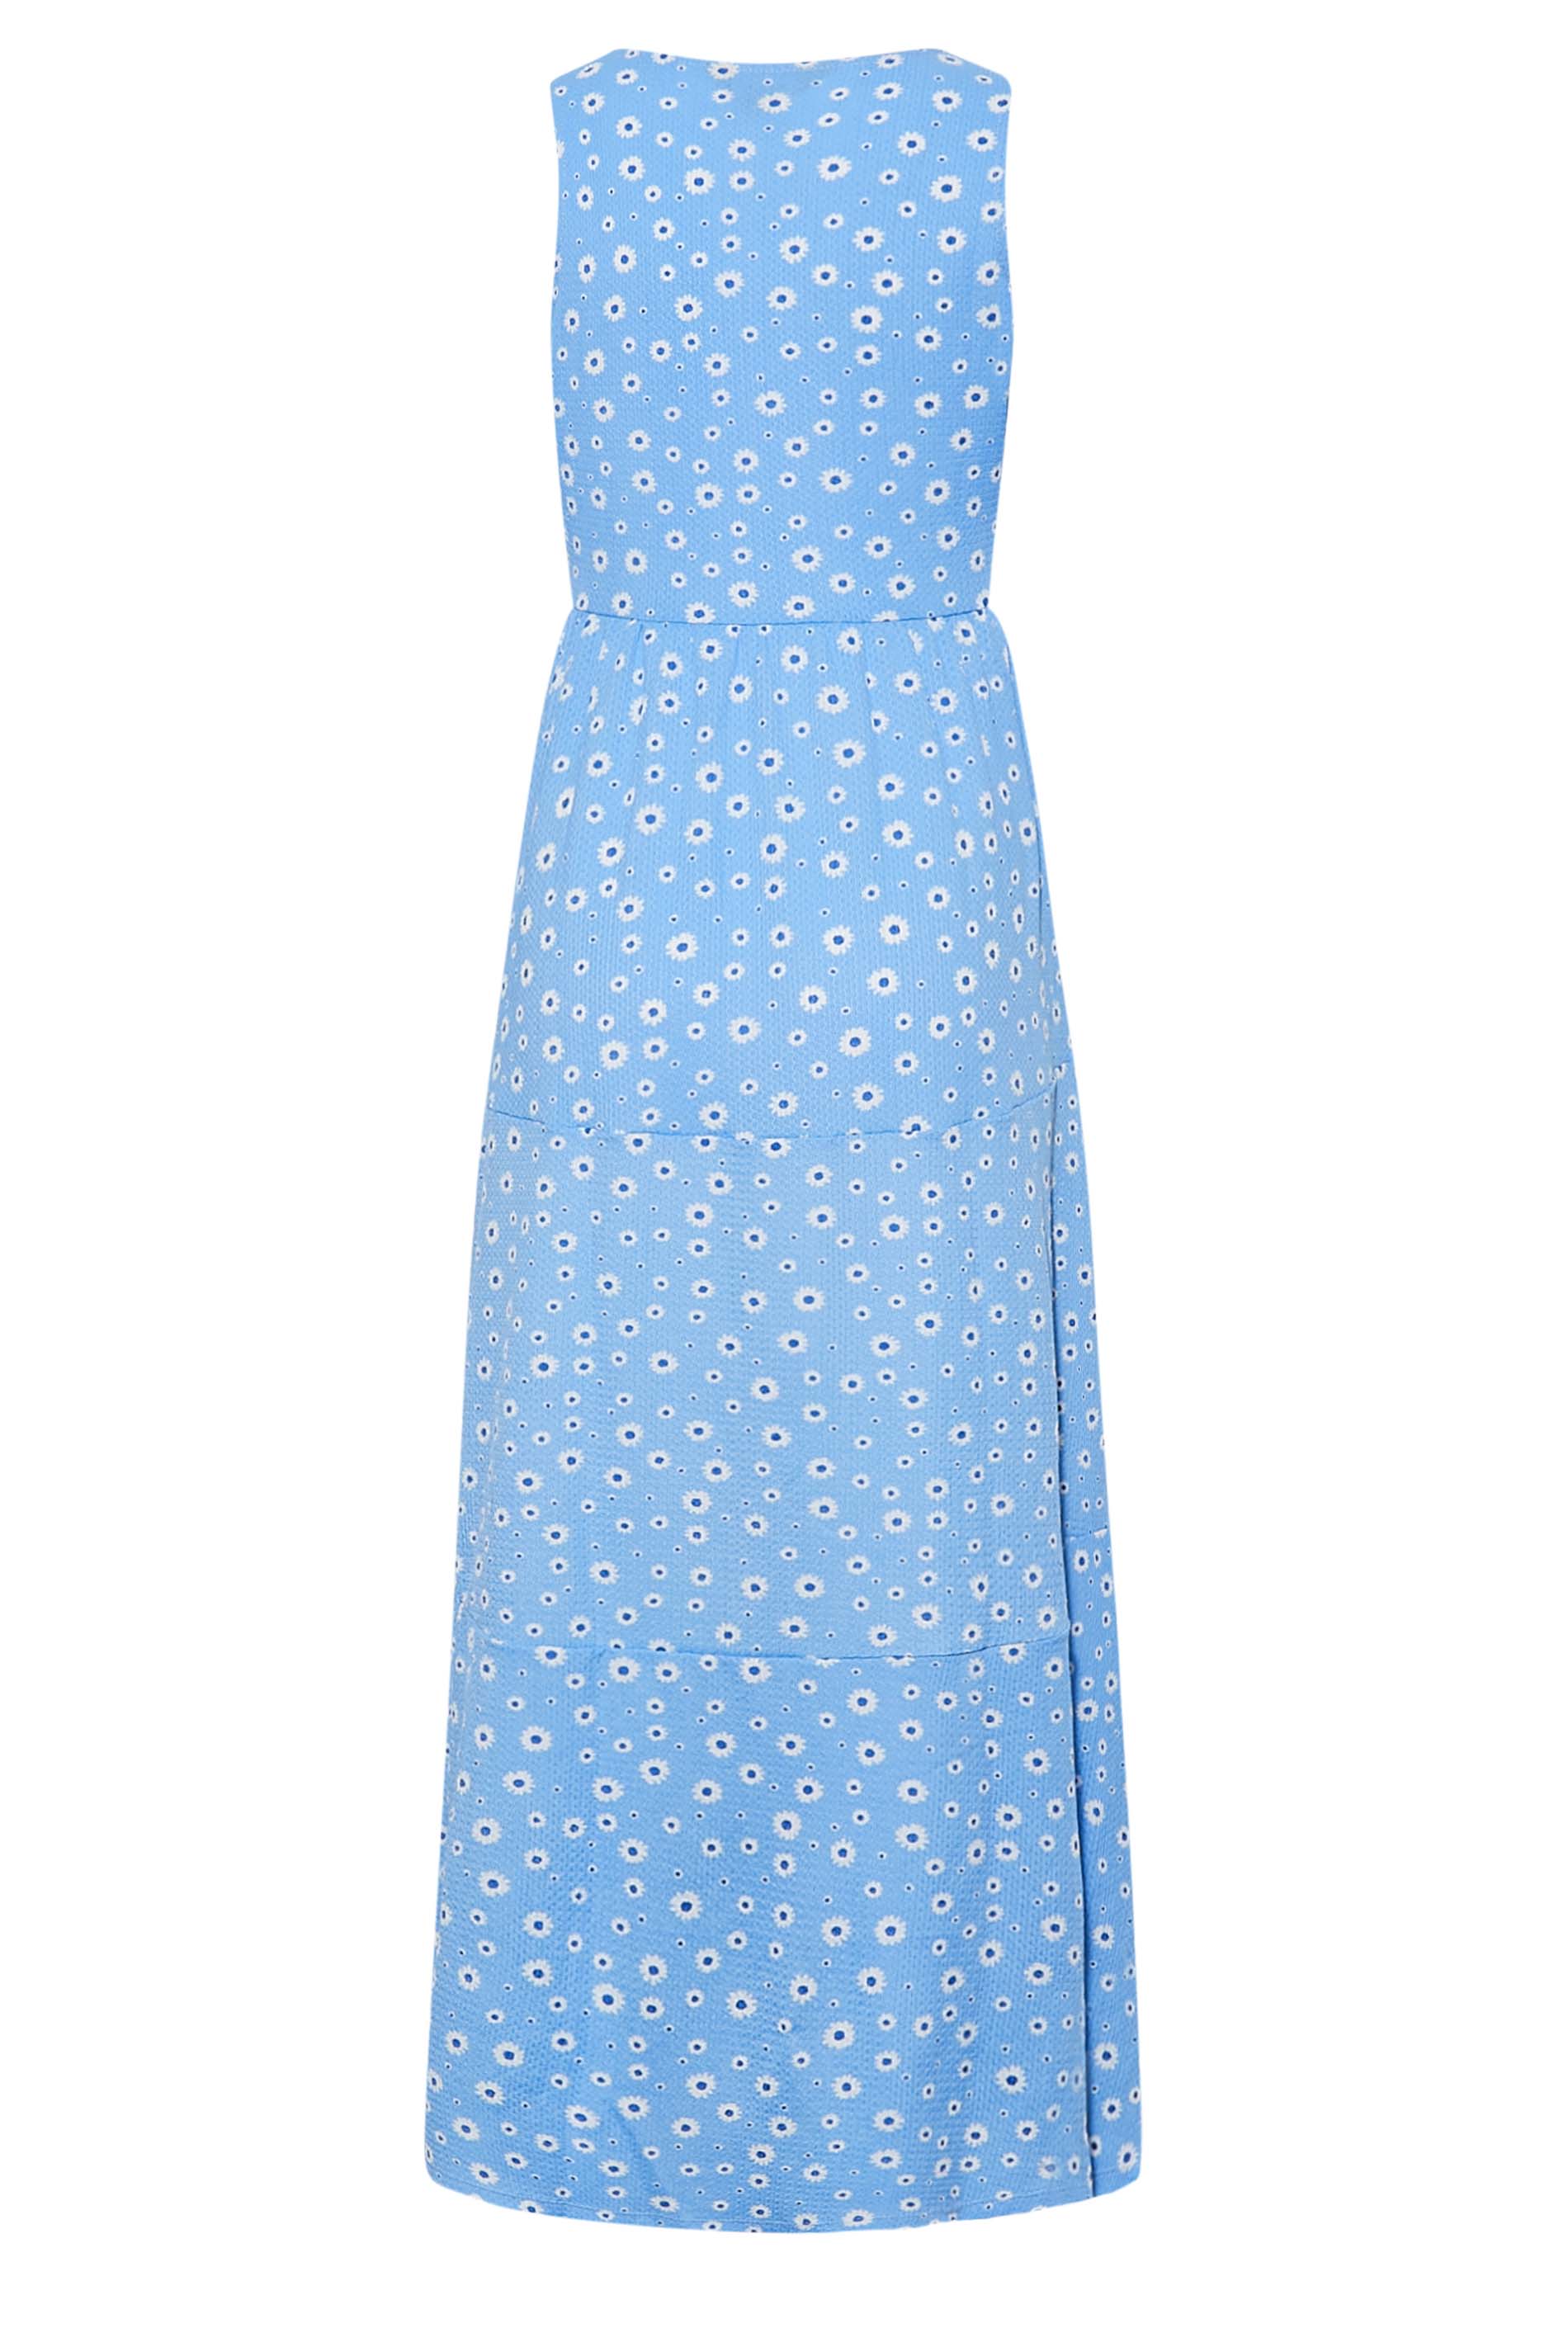 LTS Tall Women's Blue Daisy Print Maxi Dress | Long Tall Sally 3